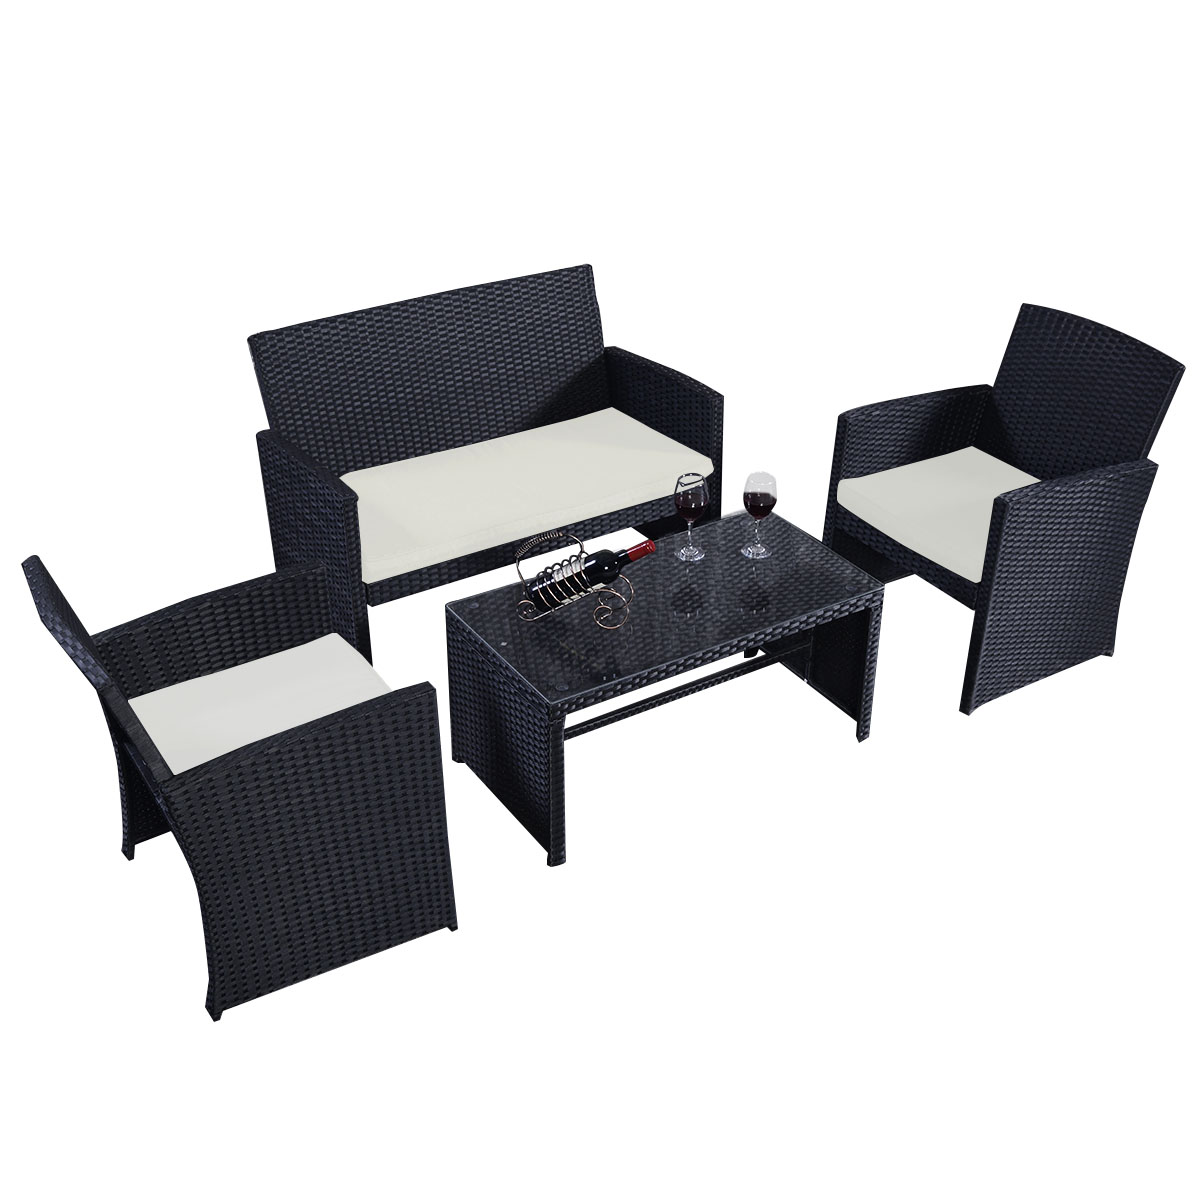 CB16574 Outdoor Wicker Rattan Patio Furniture Set, Black - 4 Piece - image 1 of 6